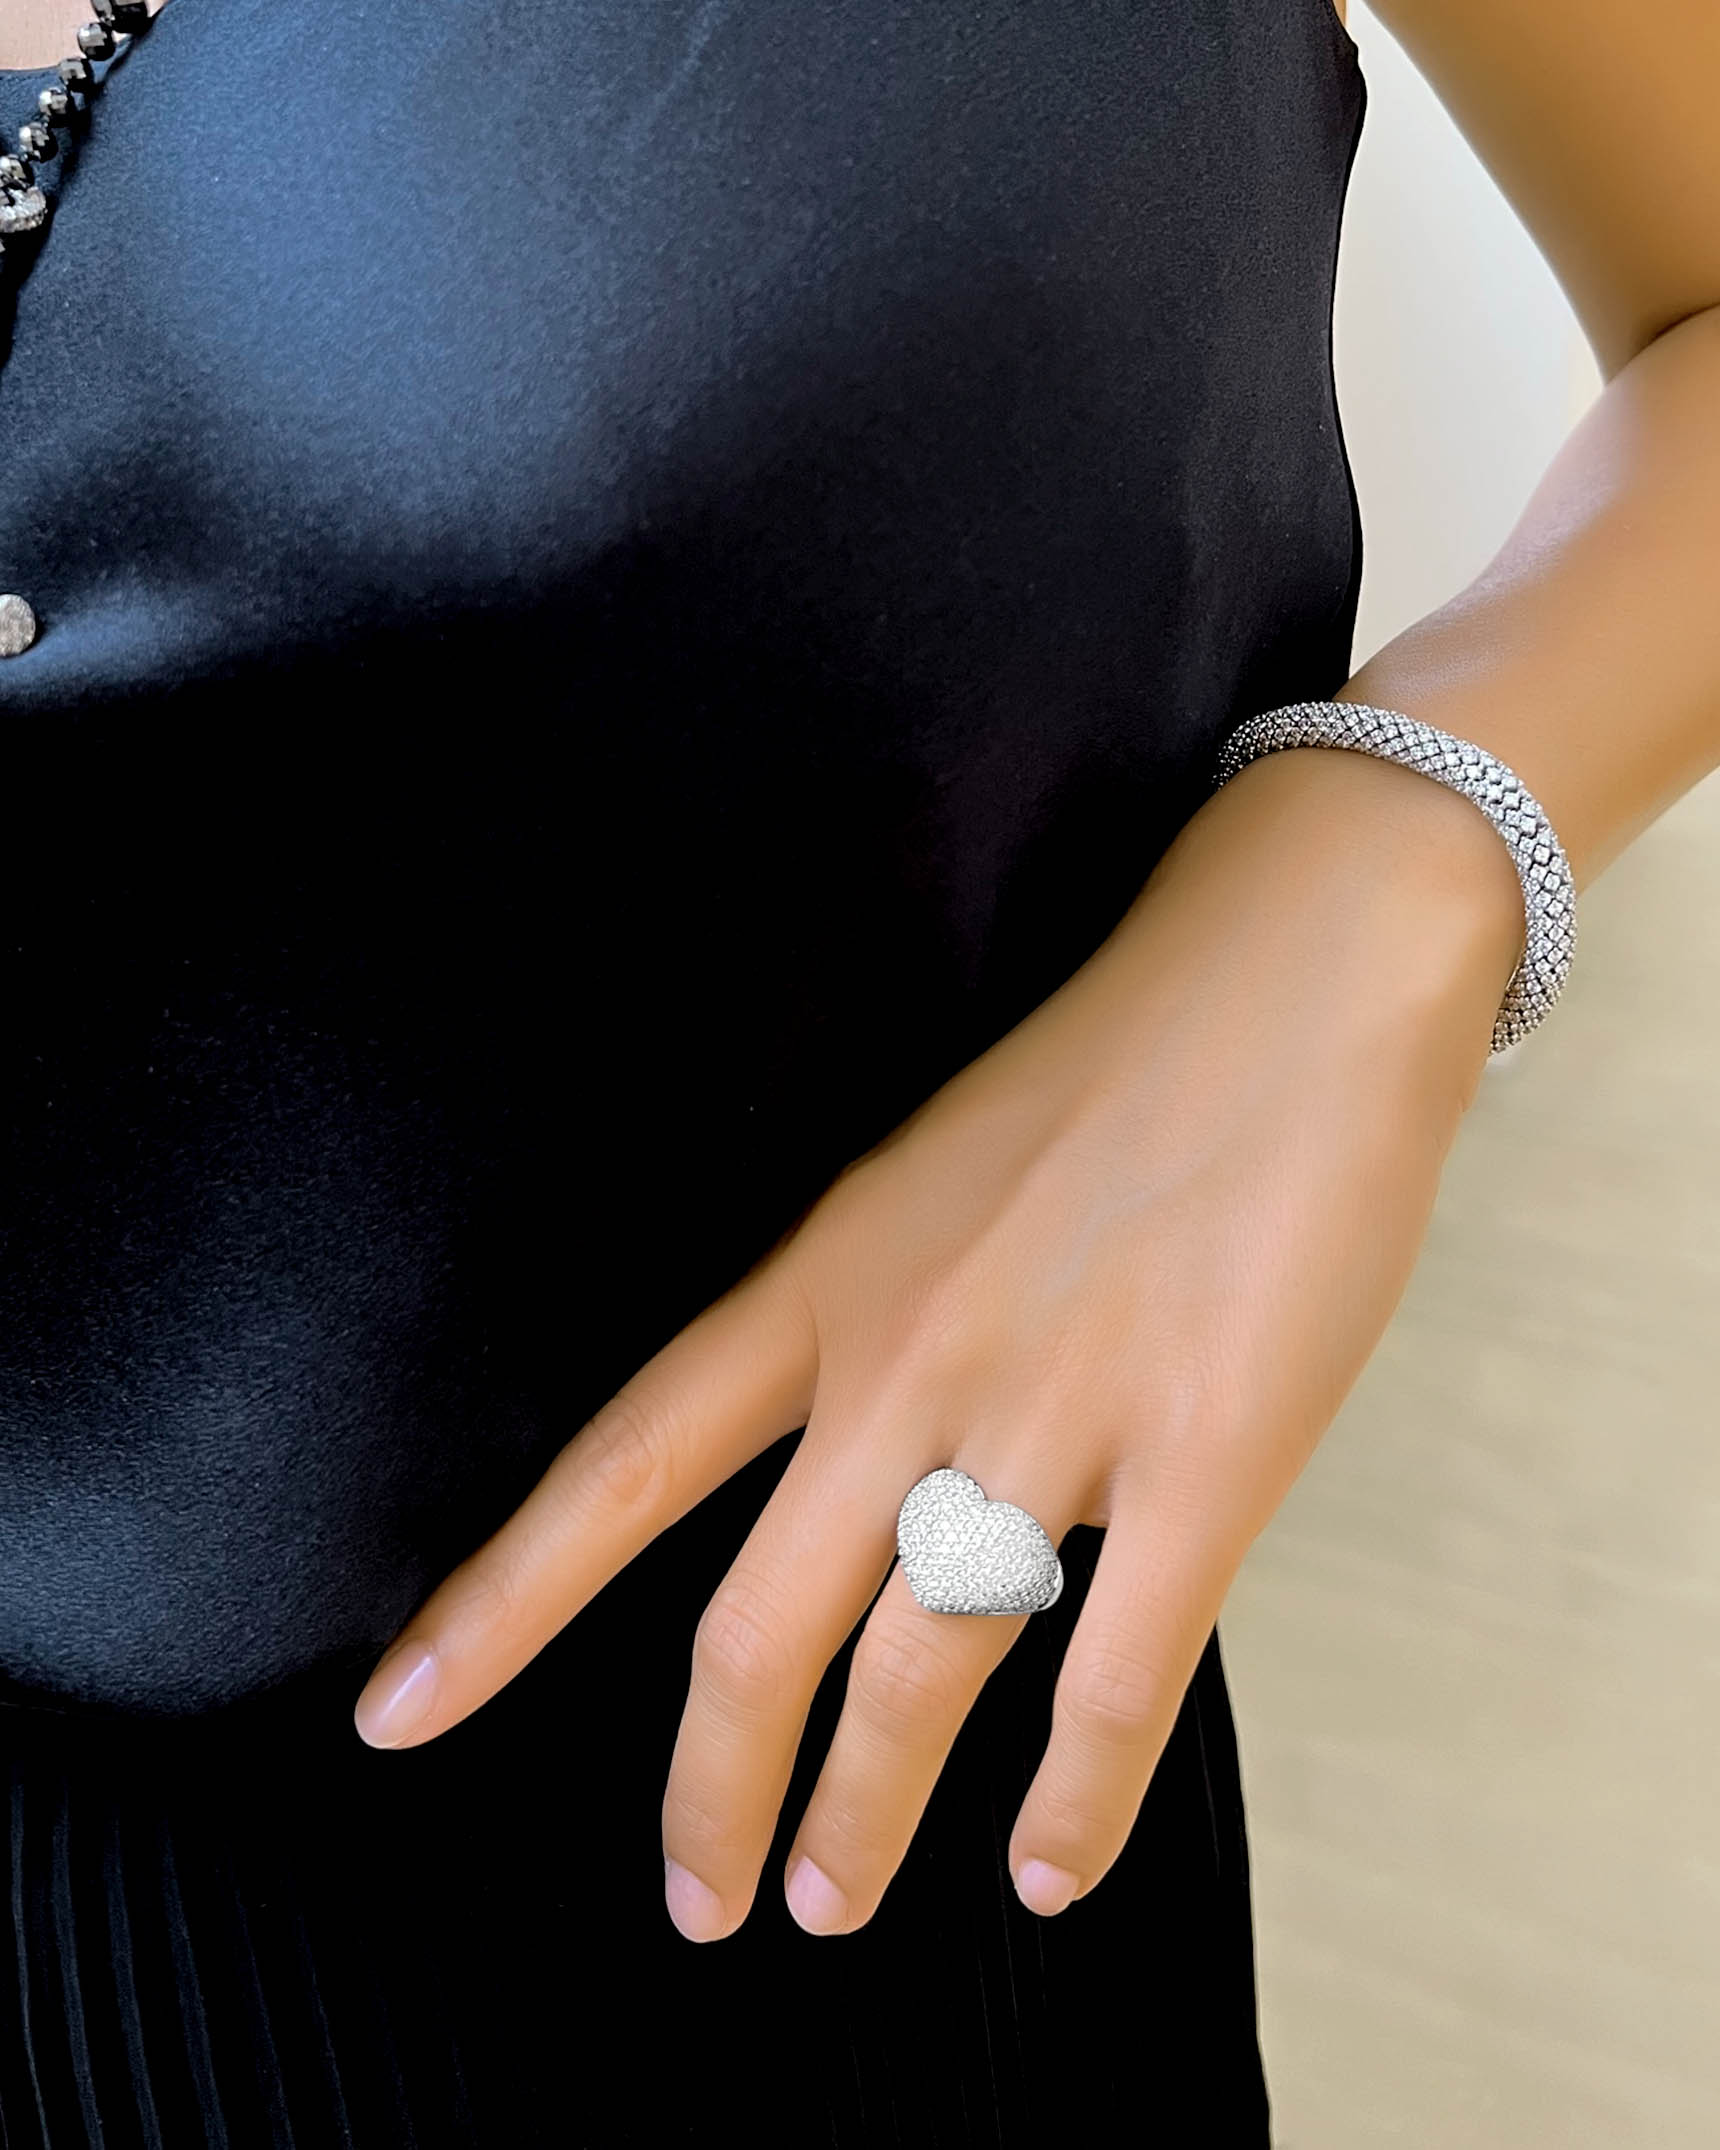 Heart Shaped Pave Diamond Ring and Pave Diamond Bracelet RFDG01330 – BDOTK04925 XX